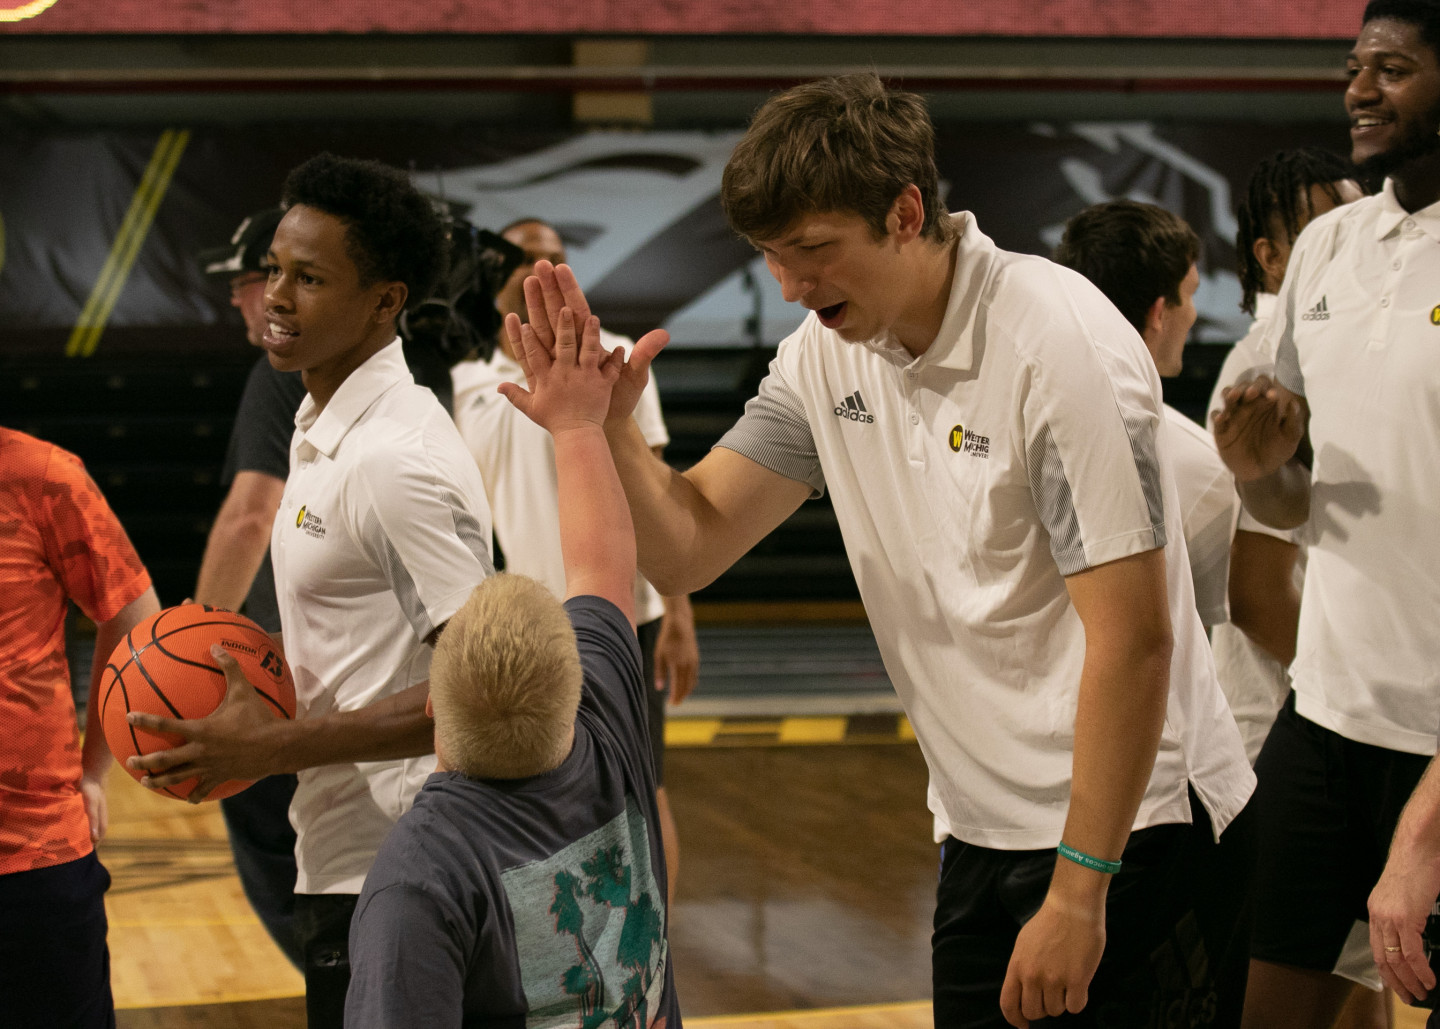 A men's basketball player high fives a participant.